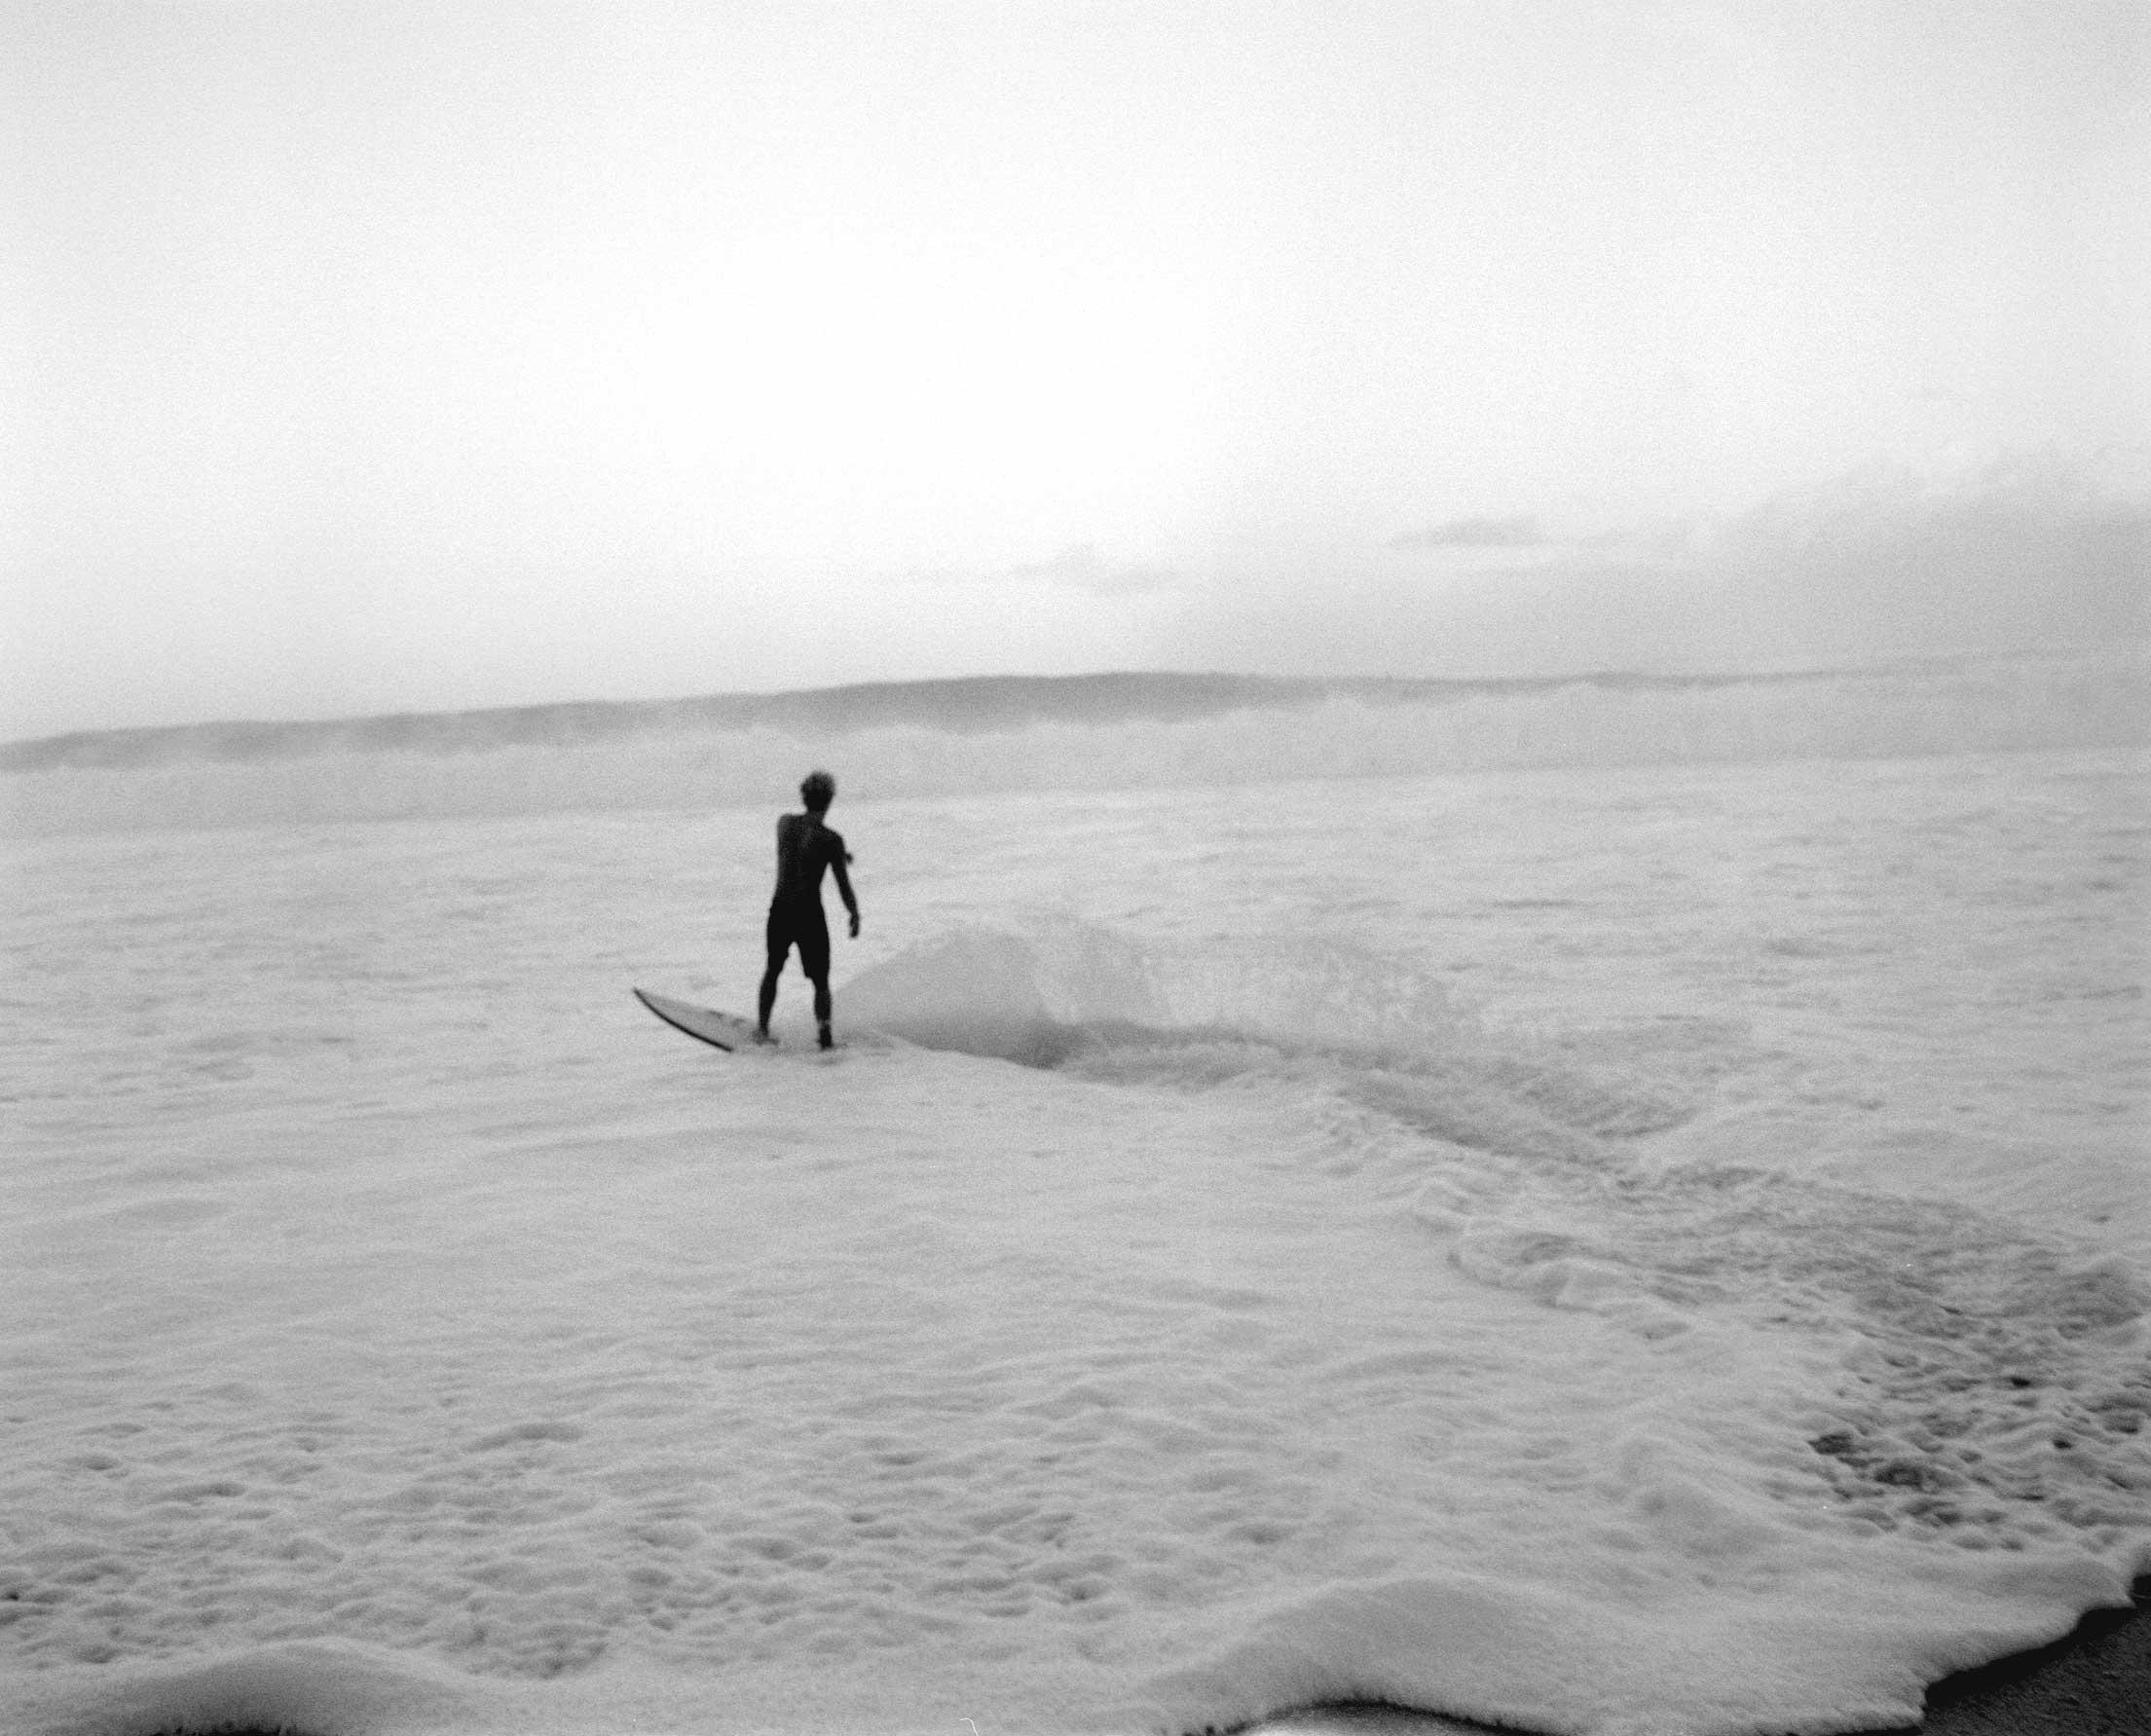 Professional surfer John John Florence, first light at dawn, on Oahu’s North Shore. Hawaii